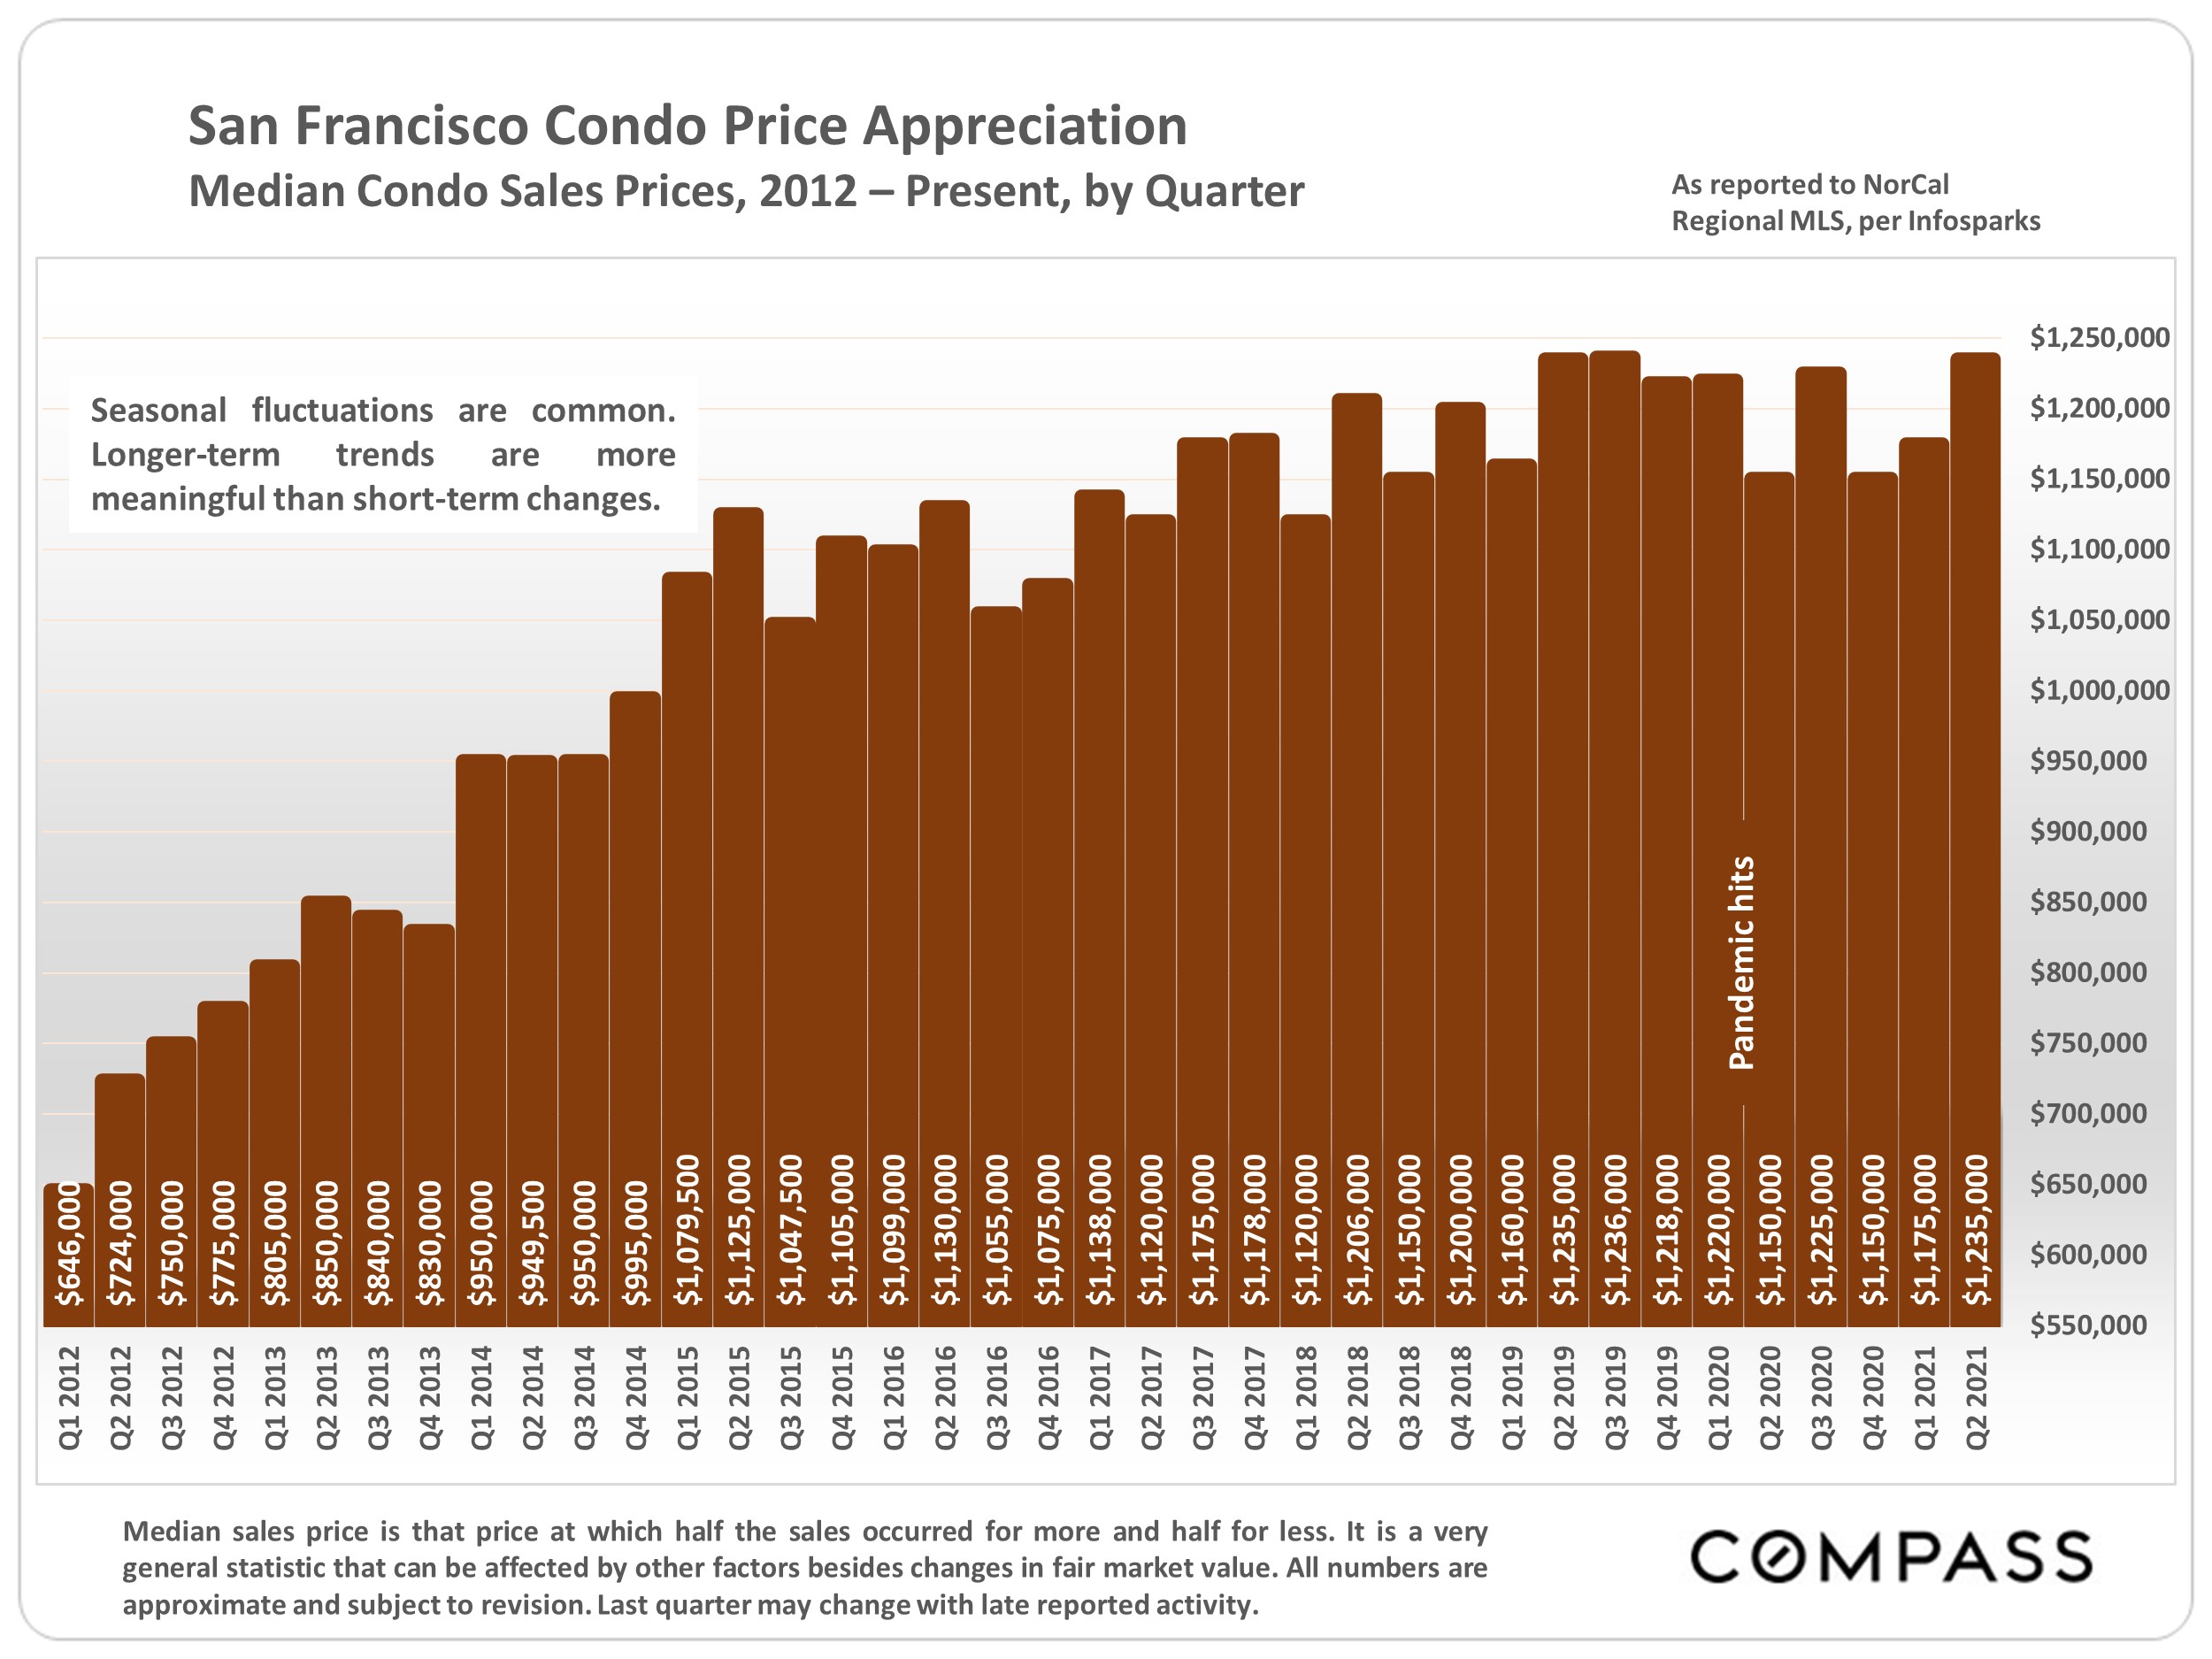 Graph of San Francisco Condo Price Appreciation, Median Condo Sales Prices, from 2012 to Present, by quarter